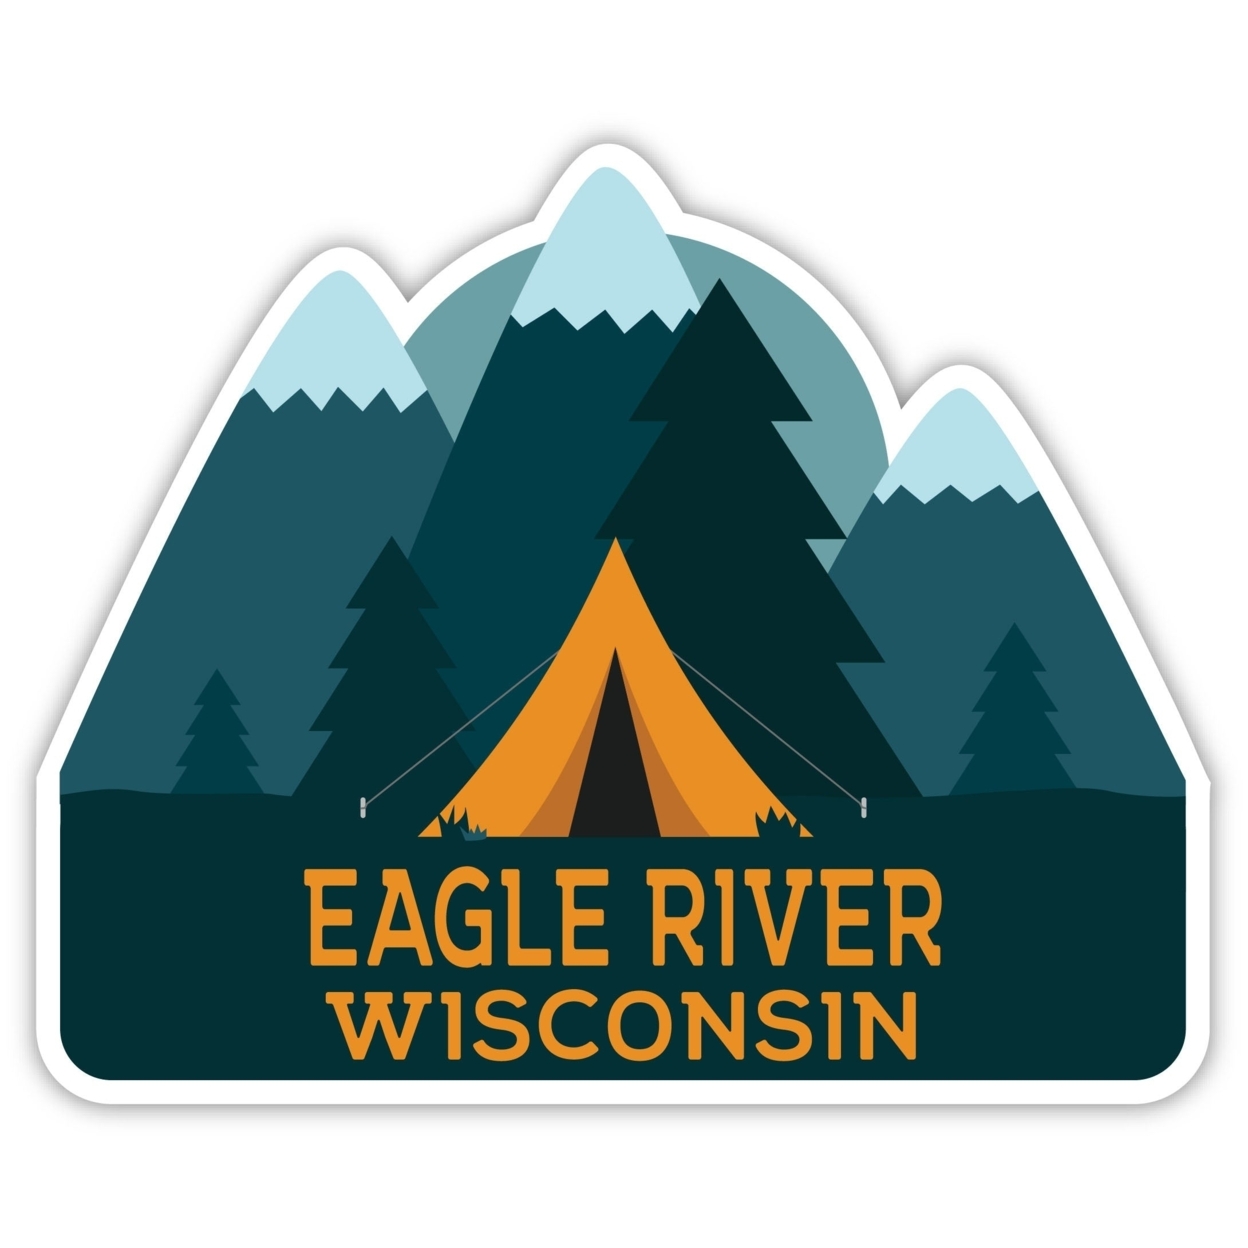 Eagle River Wisconsin Souvenir Decorative Stickers (Choose Theme And Size) - Single Unit, 4-Inch, Adventures Awaits